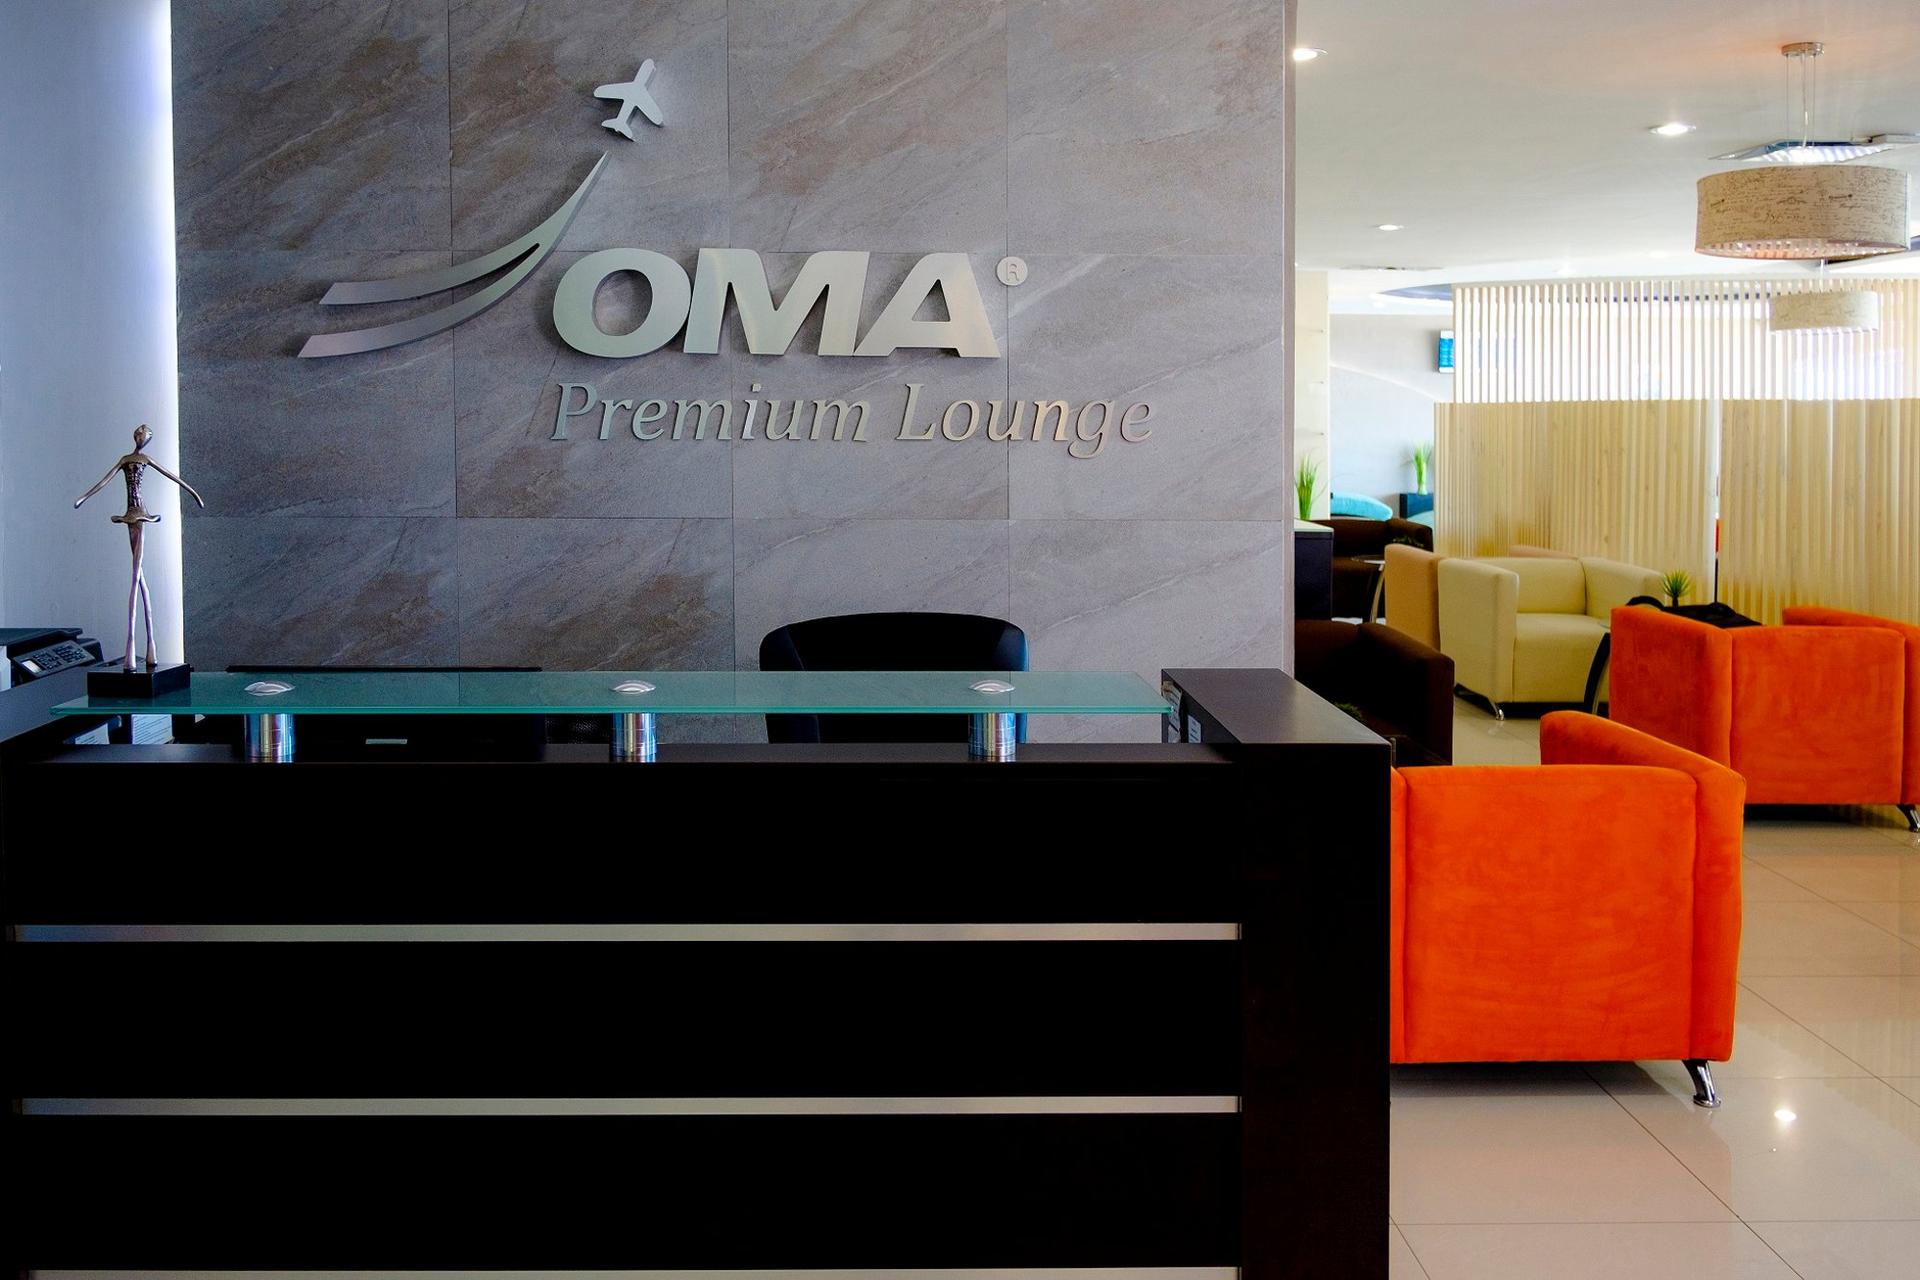 OMA Premium Lounge image 10 of 22